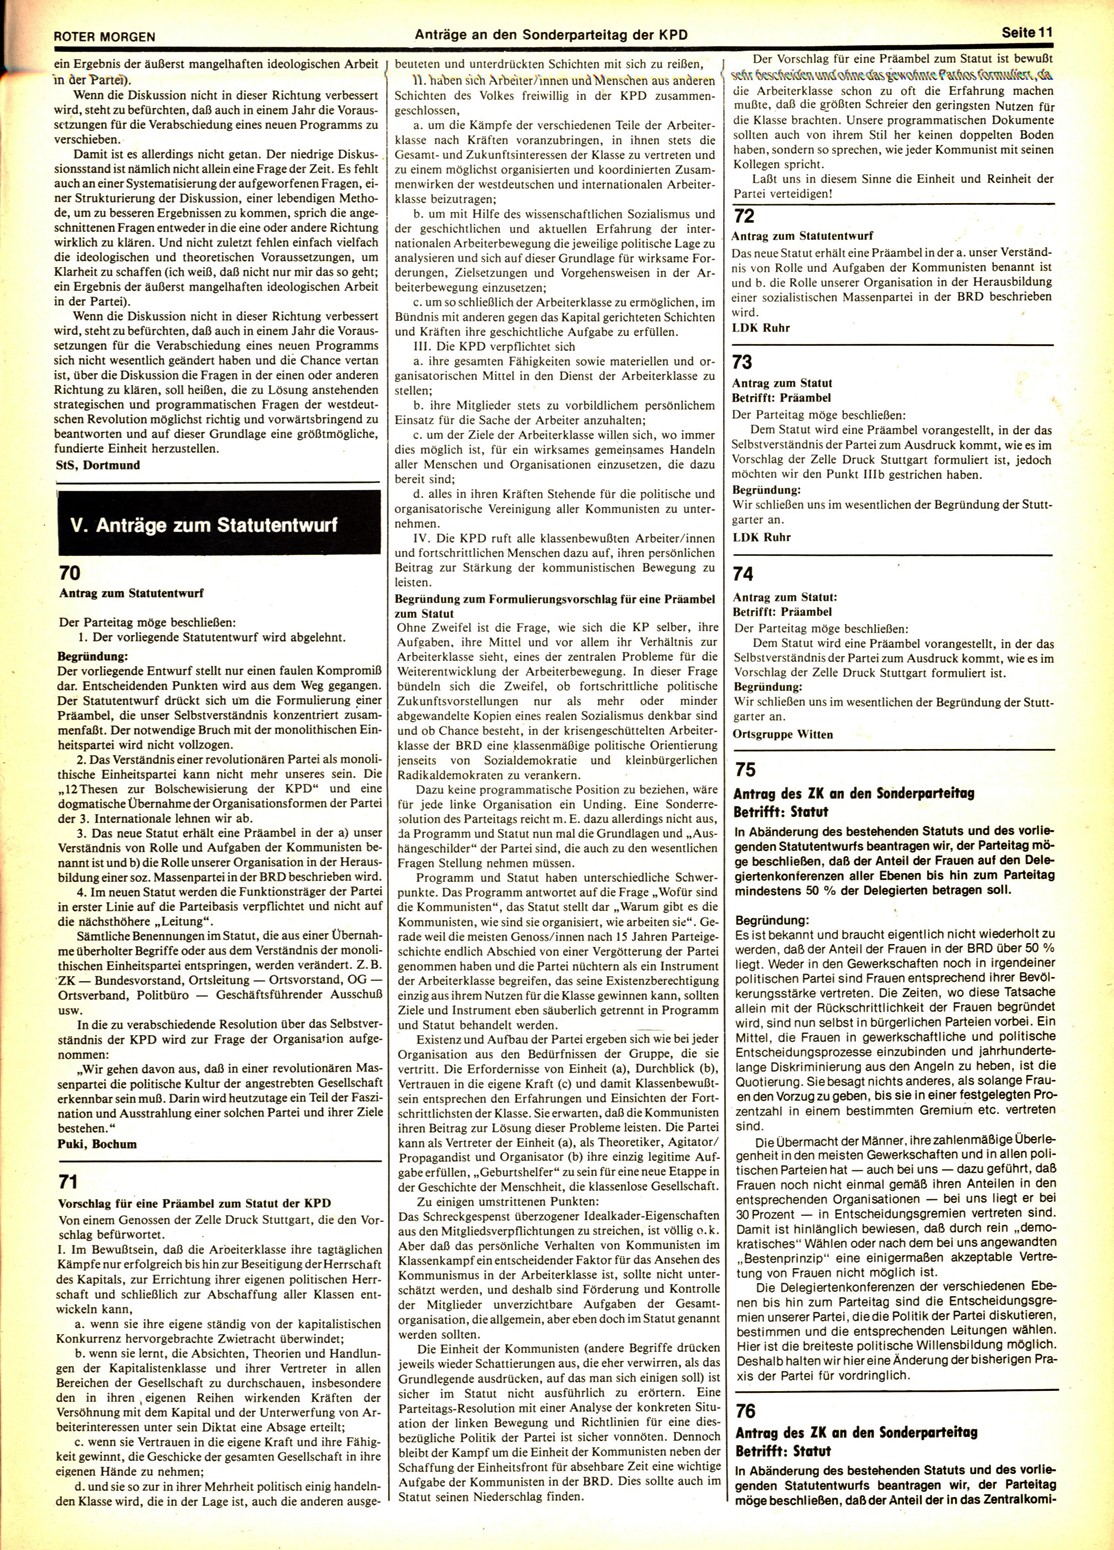 Roter Morgen, 19. Jg., 11. Oktober 1985, Nr. 41, Sonderbeilage, Seite 11